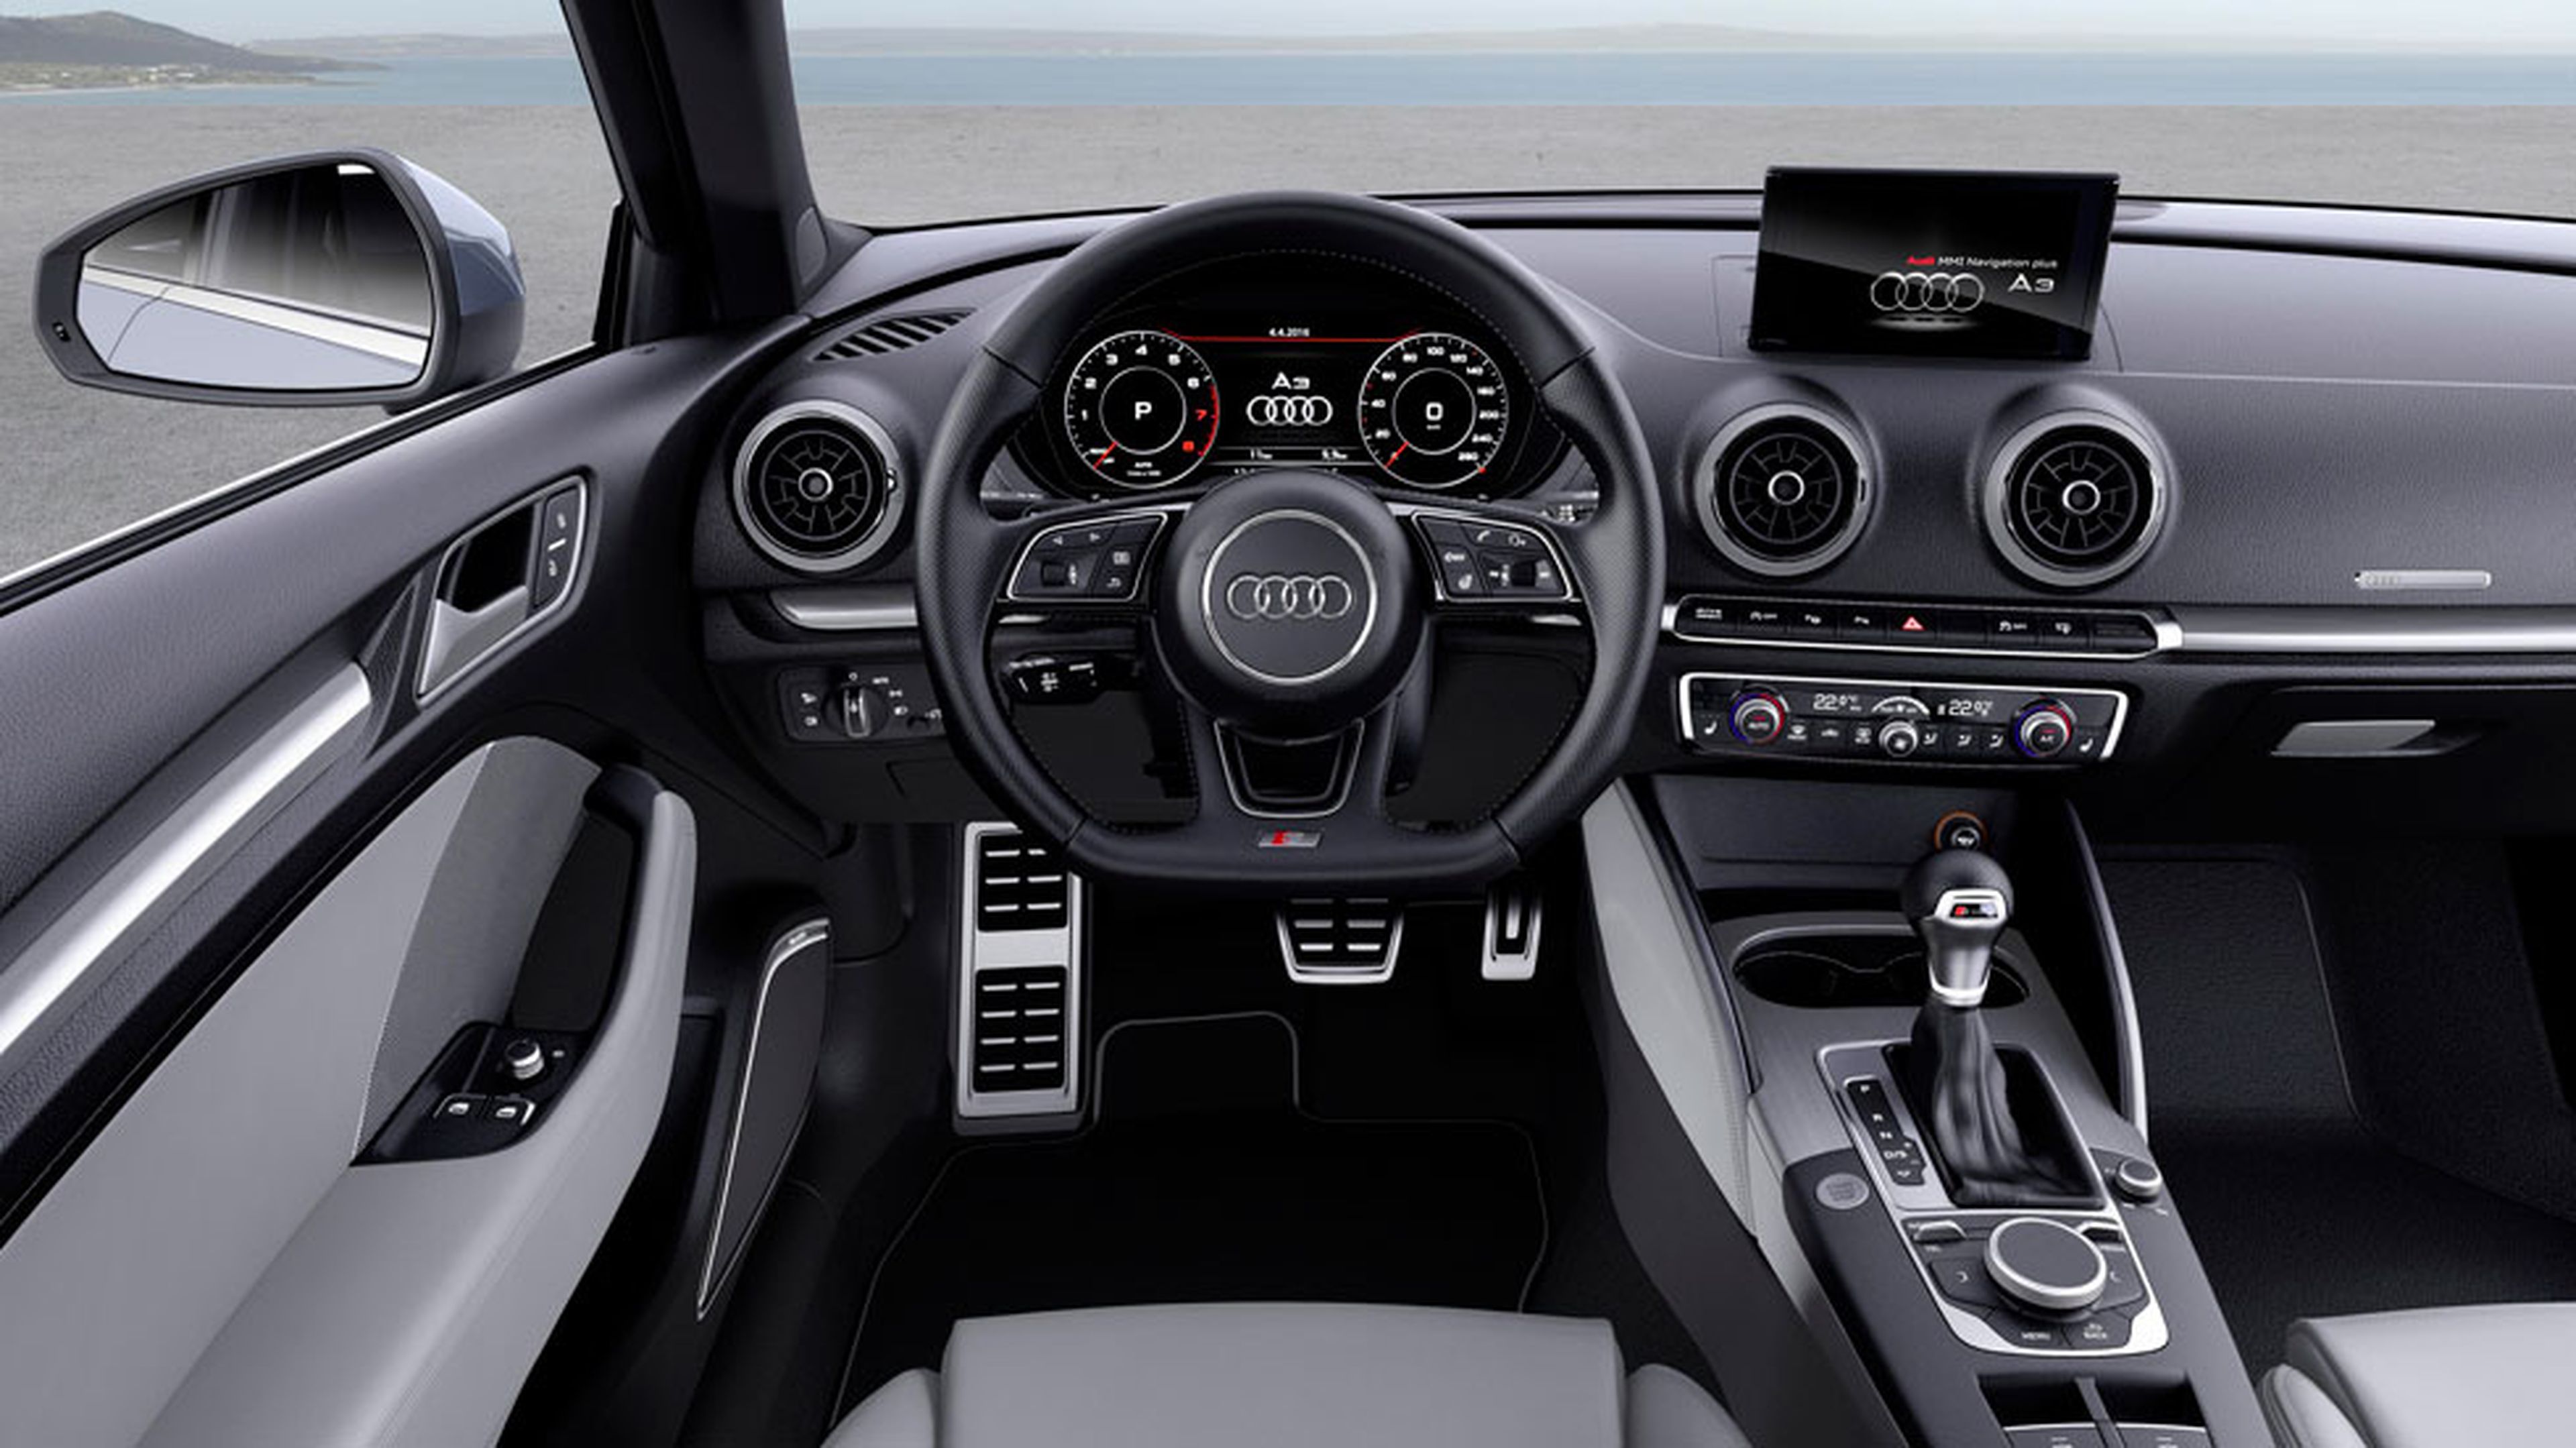 Audi A3 2016 interior